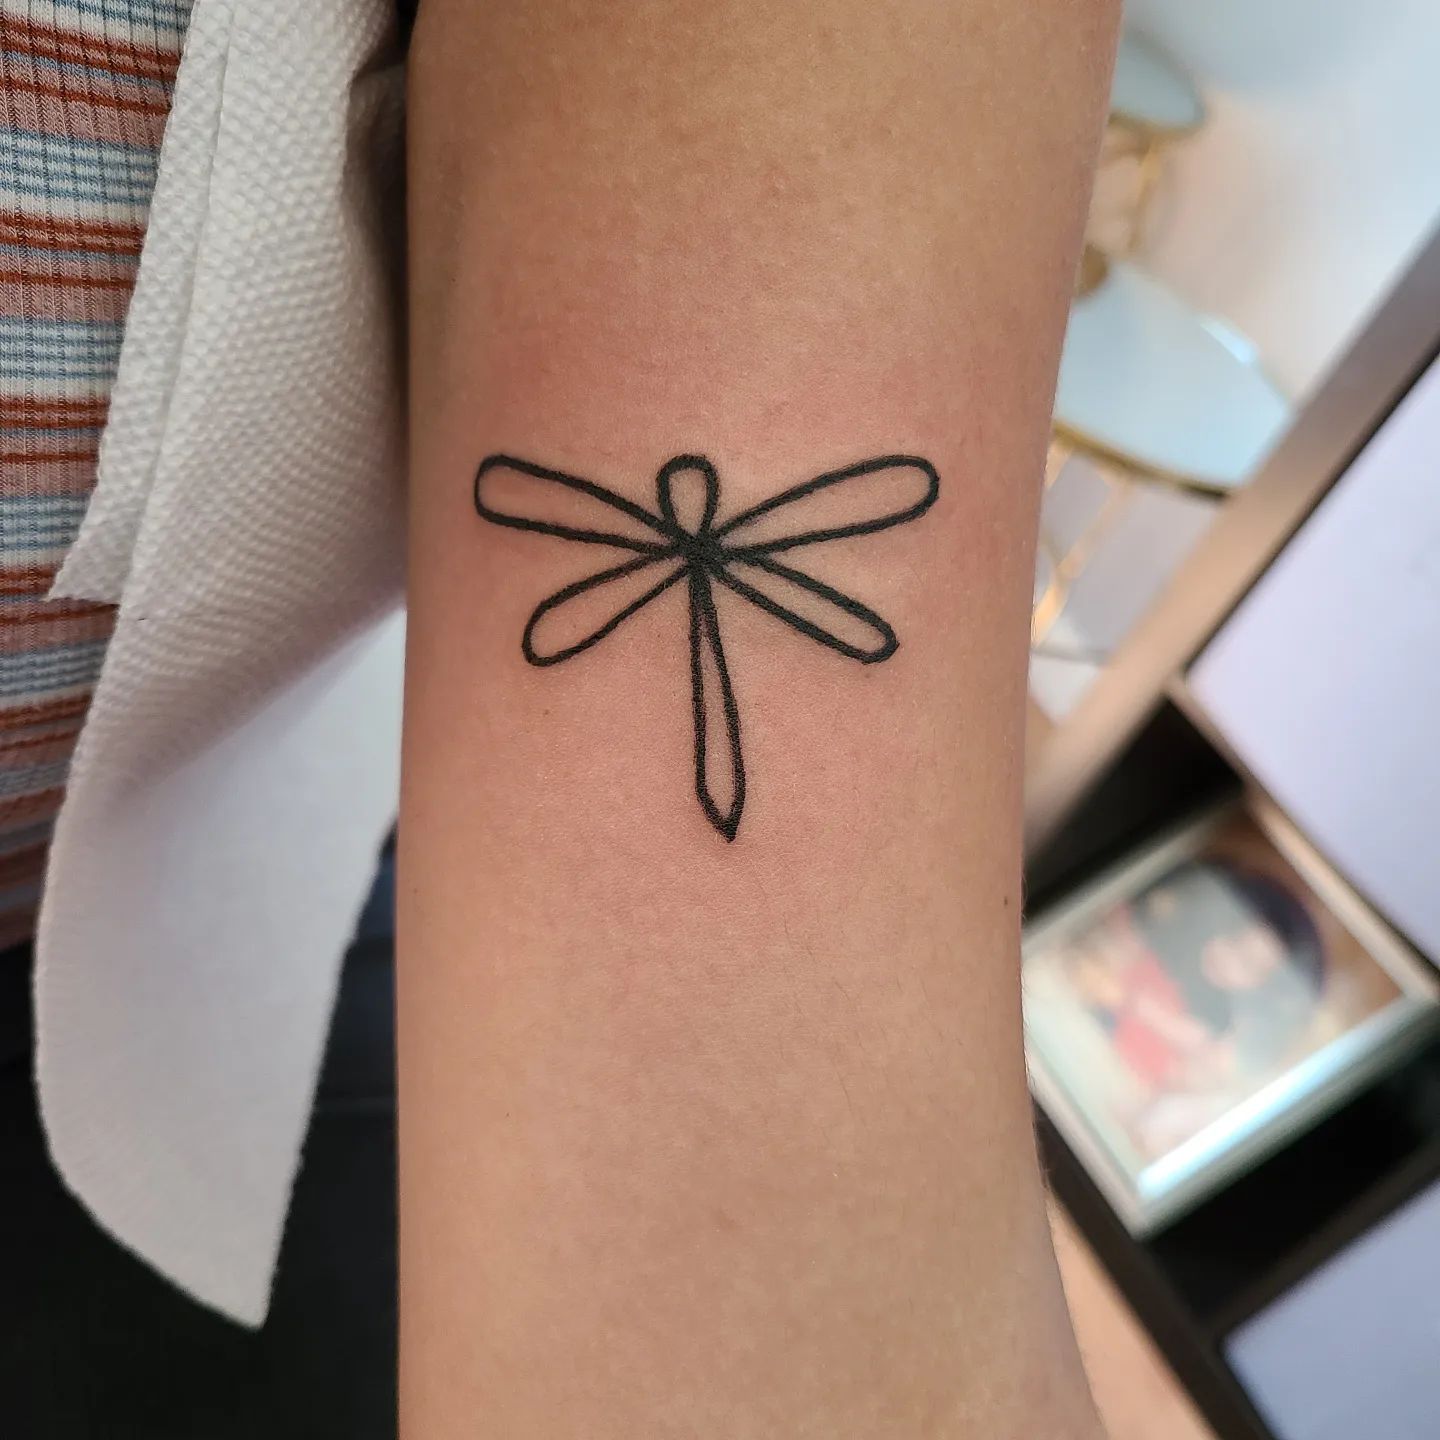 Tatuaje de pequeña libélula negra.